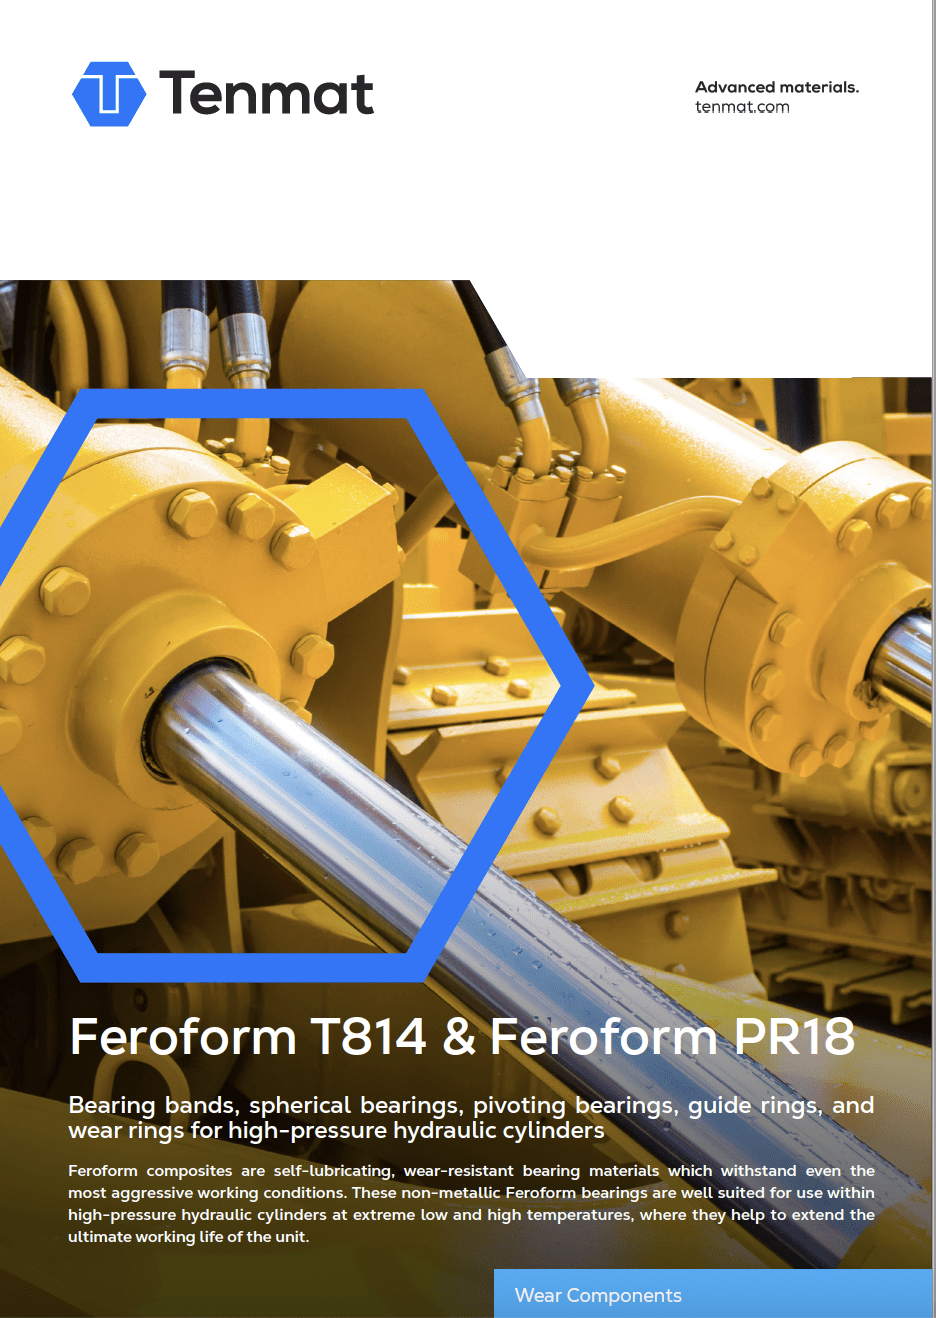 Feroform T814 and PR18